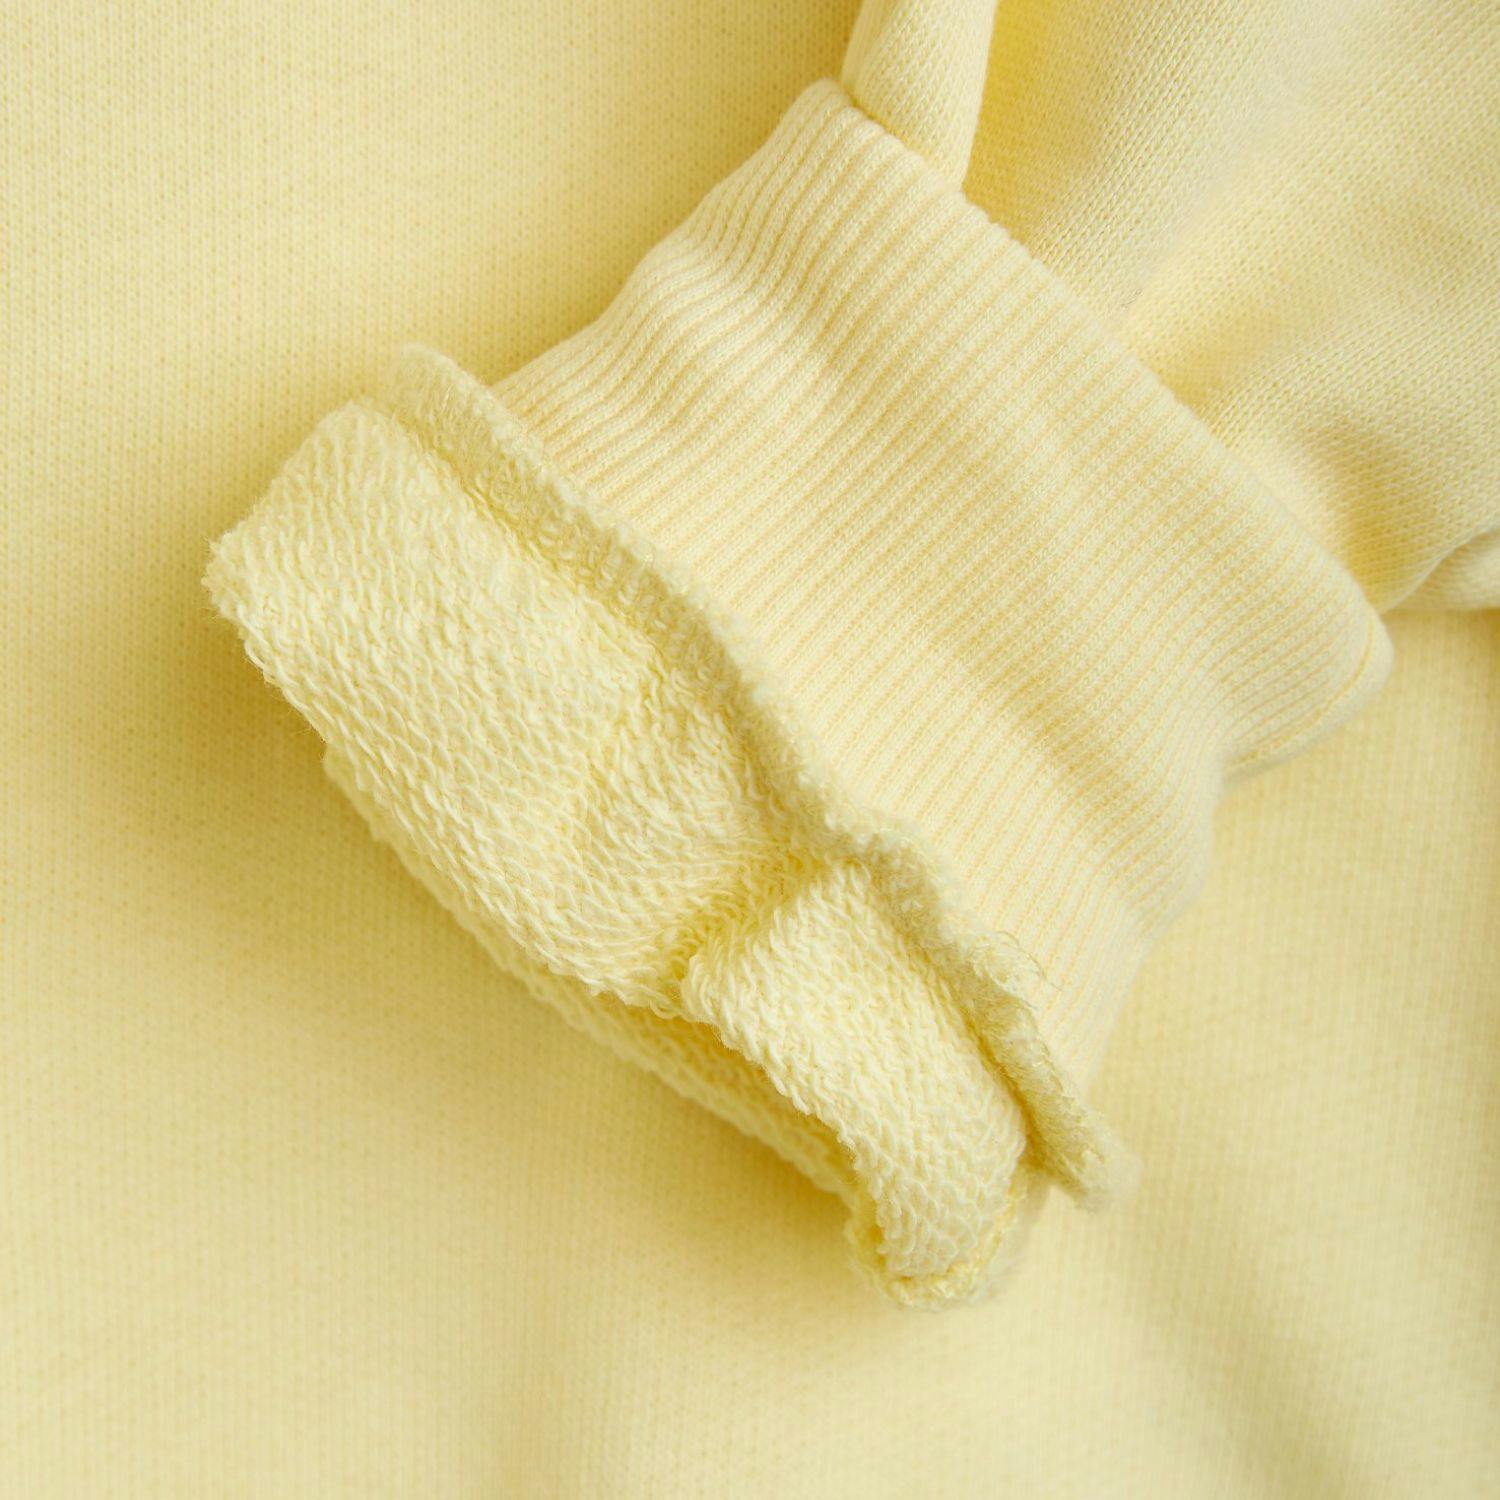 Tröja - Sweatshirt - Ladybird embroidered yellow